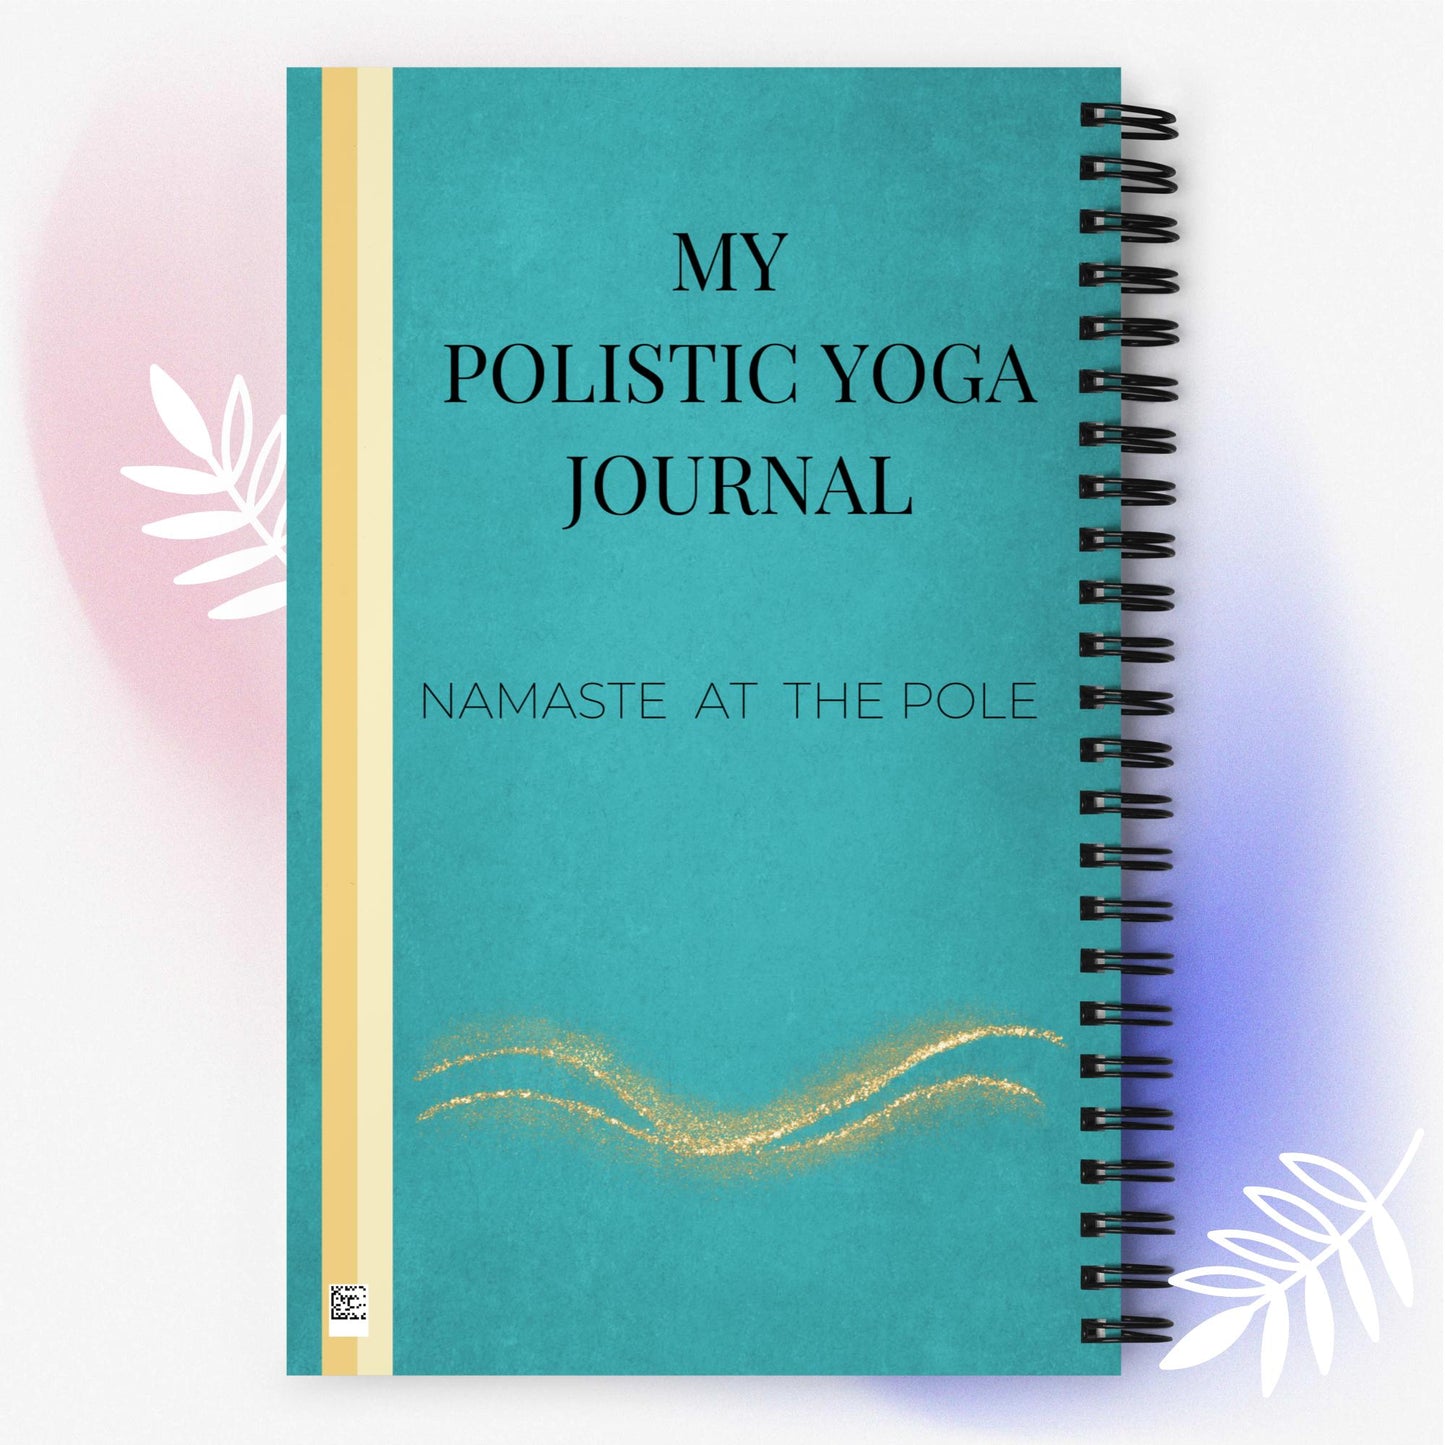 Polistic Pole Yoga Spiral Full Moon Journal/Notebook